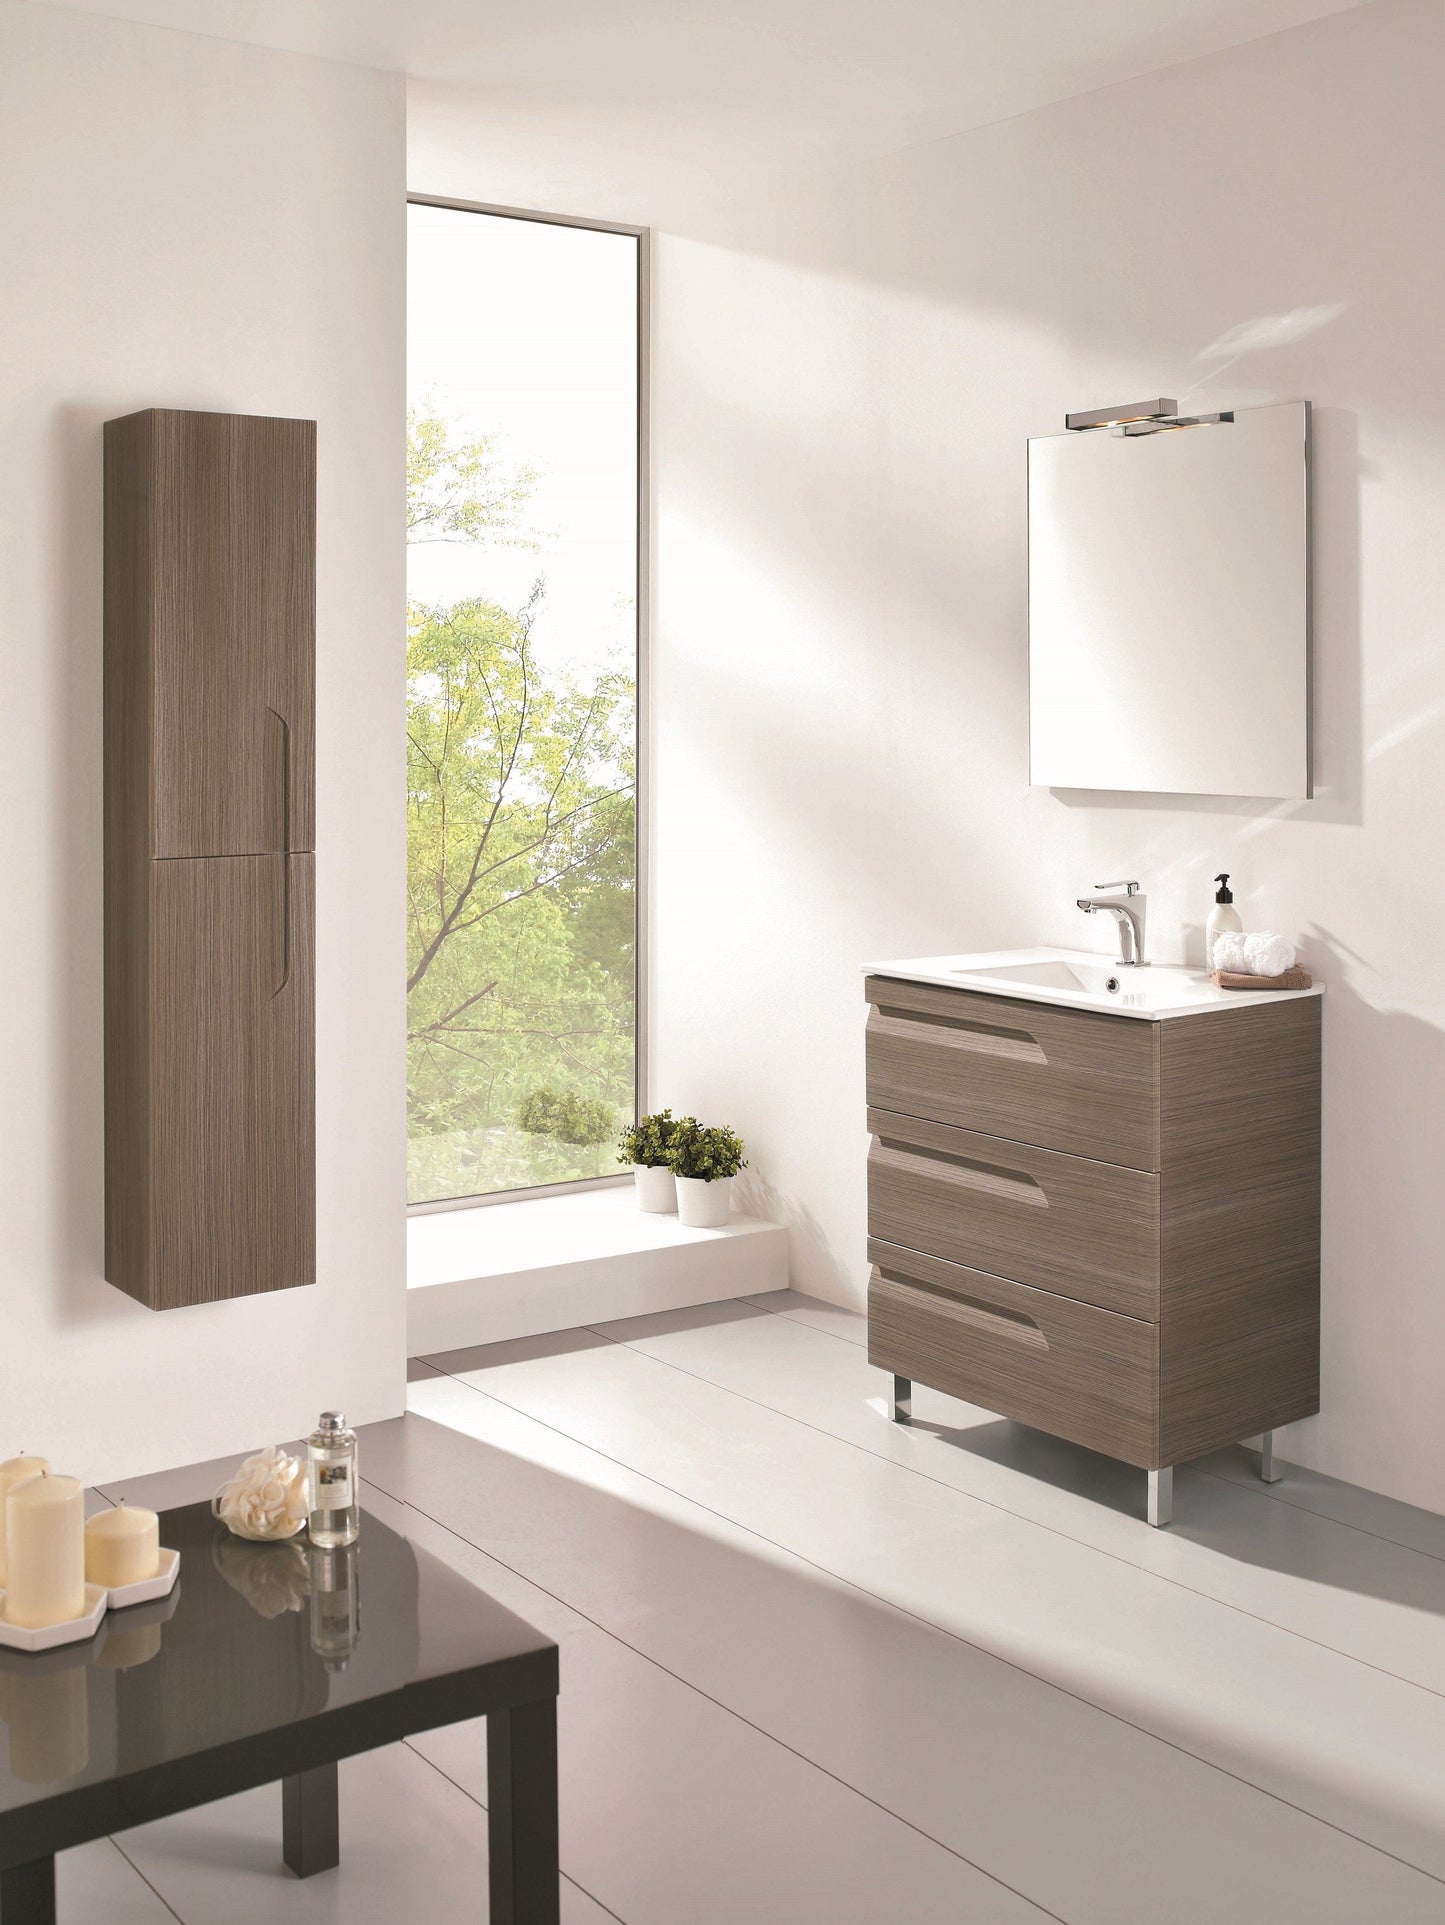 Eviva Vitta 39? Modern Bathroom Vanity with White Integrated Porcelain Sink - Luxe Bathroom Vanities Luxury Bathroom Fixtures Bathroom Furniture